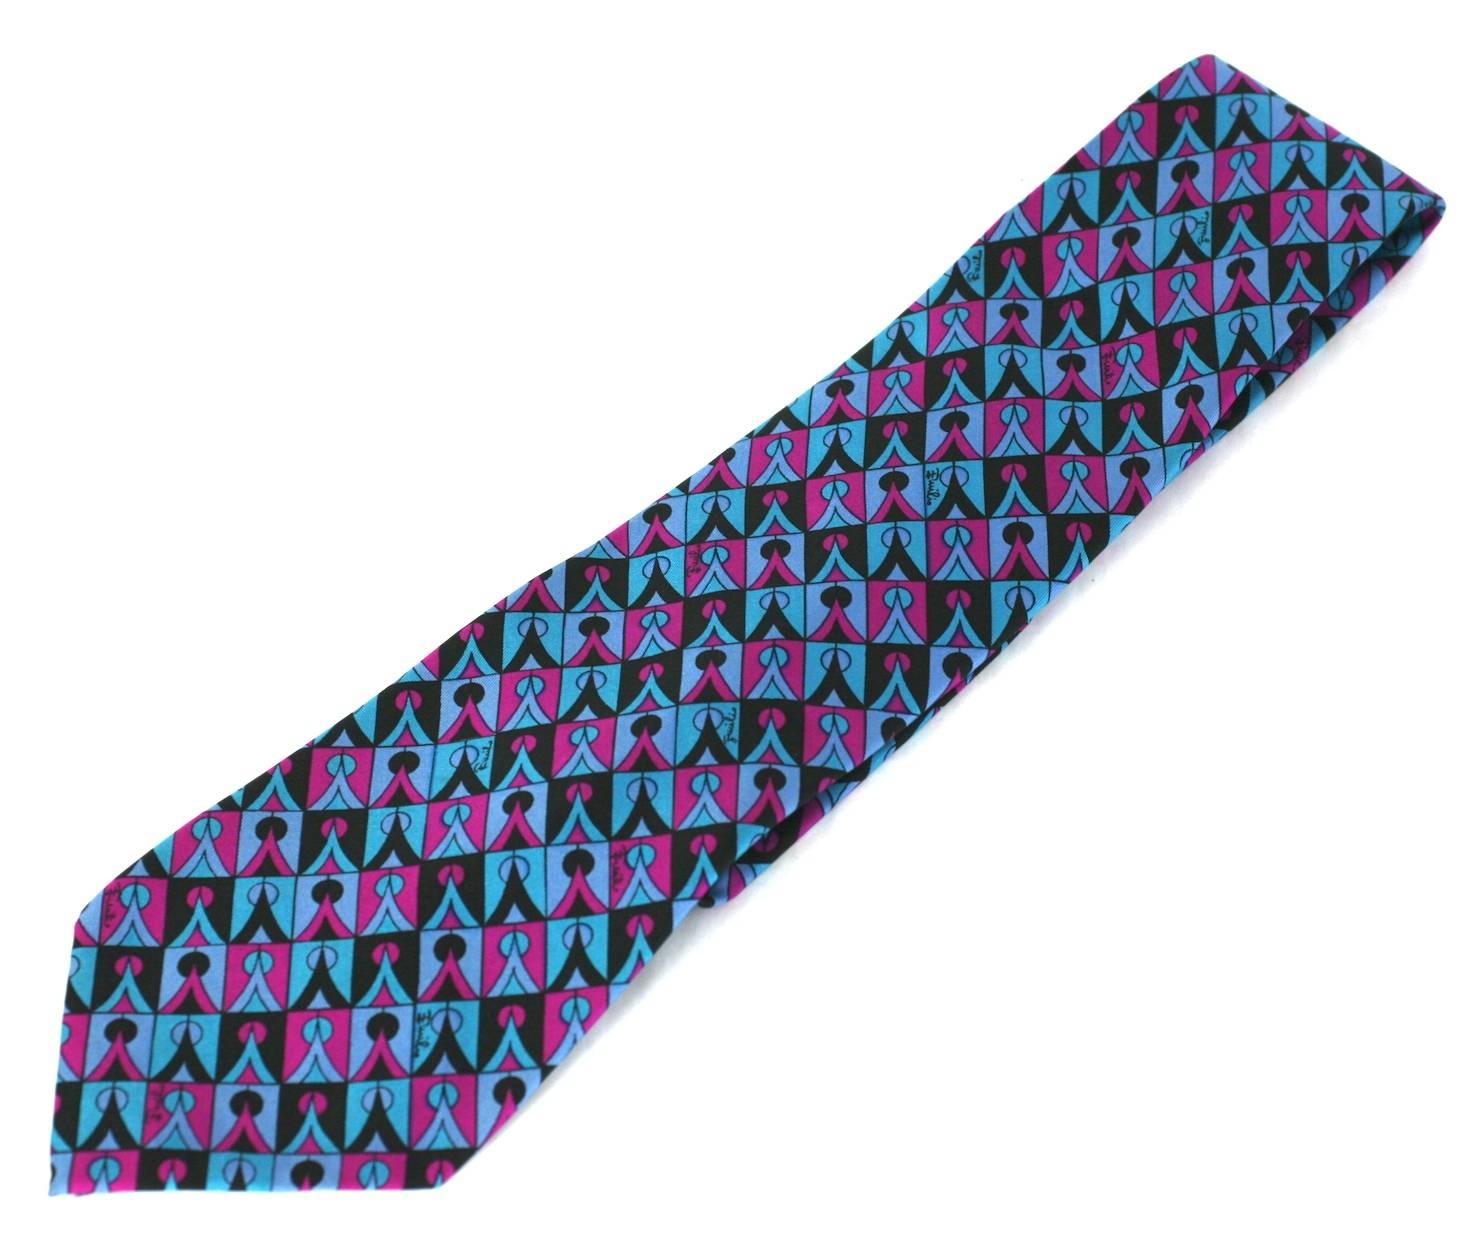 Emilio Pucci signature graphics, printed silk twill men's necktie in classic colors of turquoise, fuschia,and black. 3